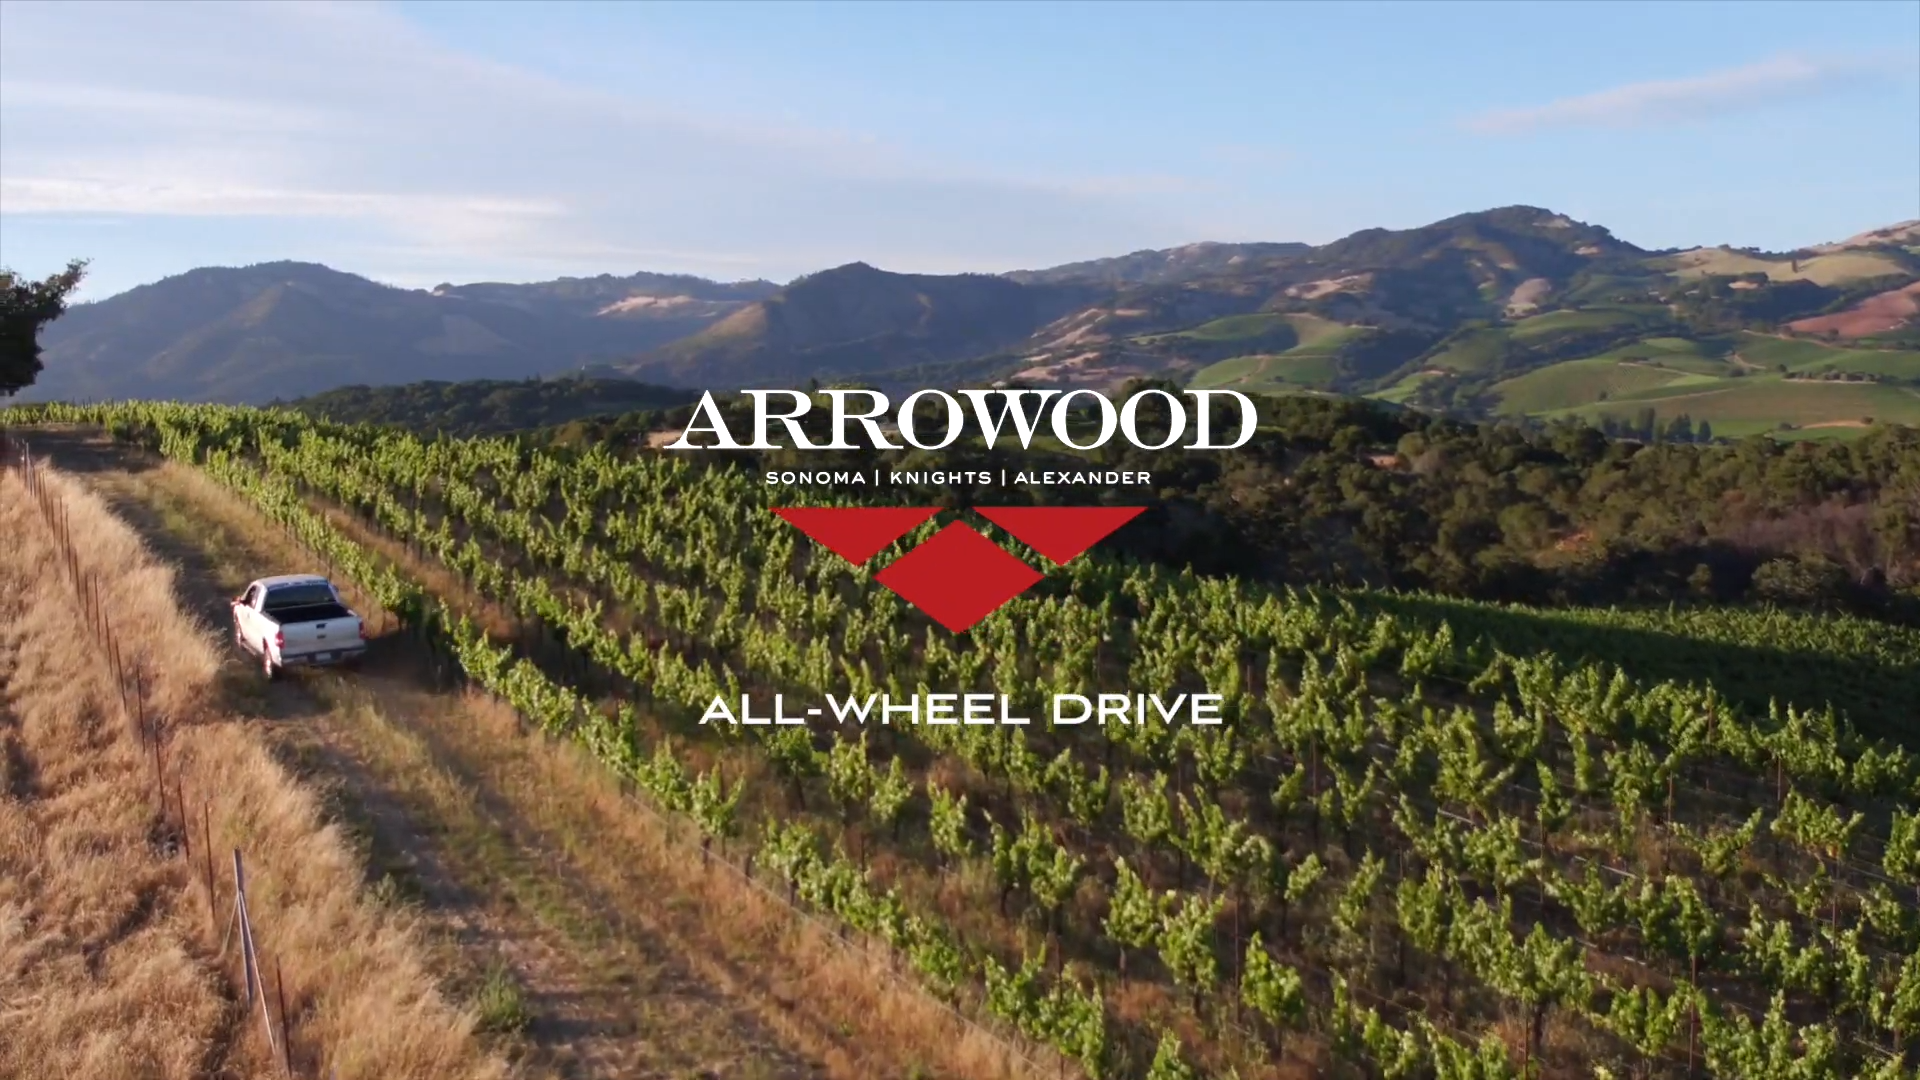 ARROWOOD ALL-WHEEL DRIVE PART II